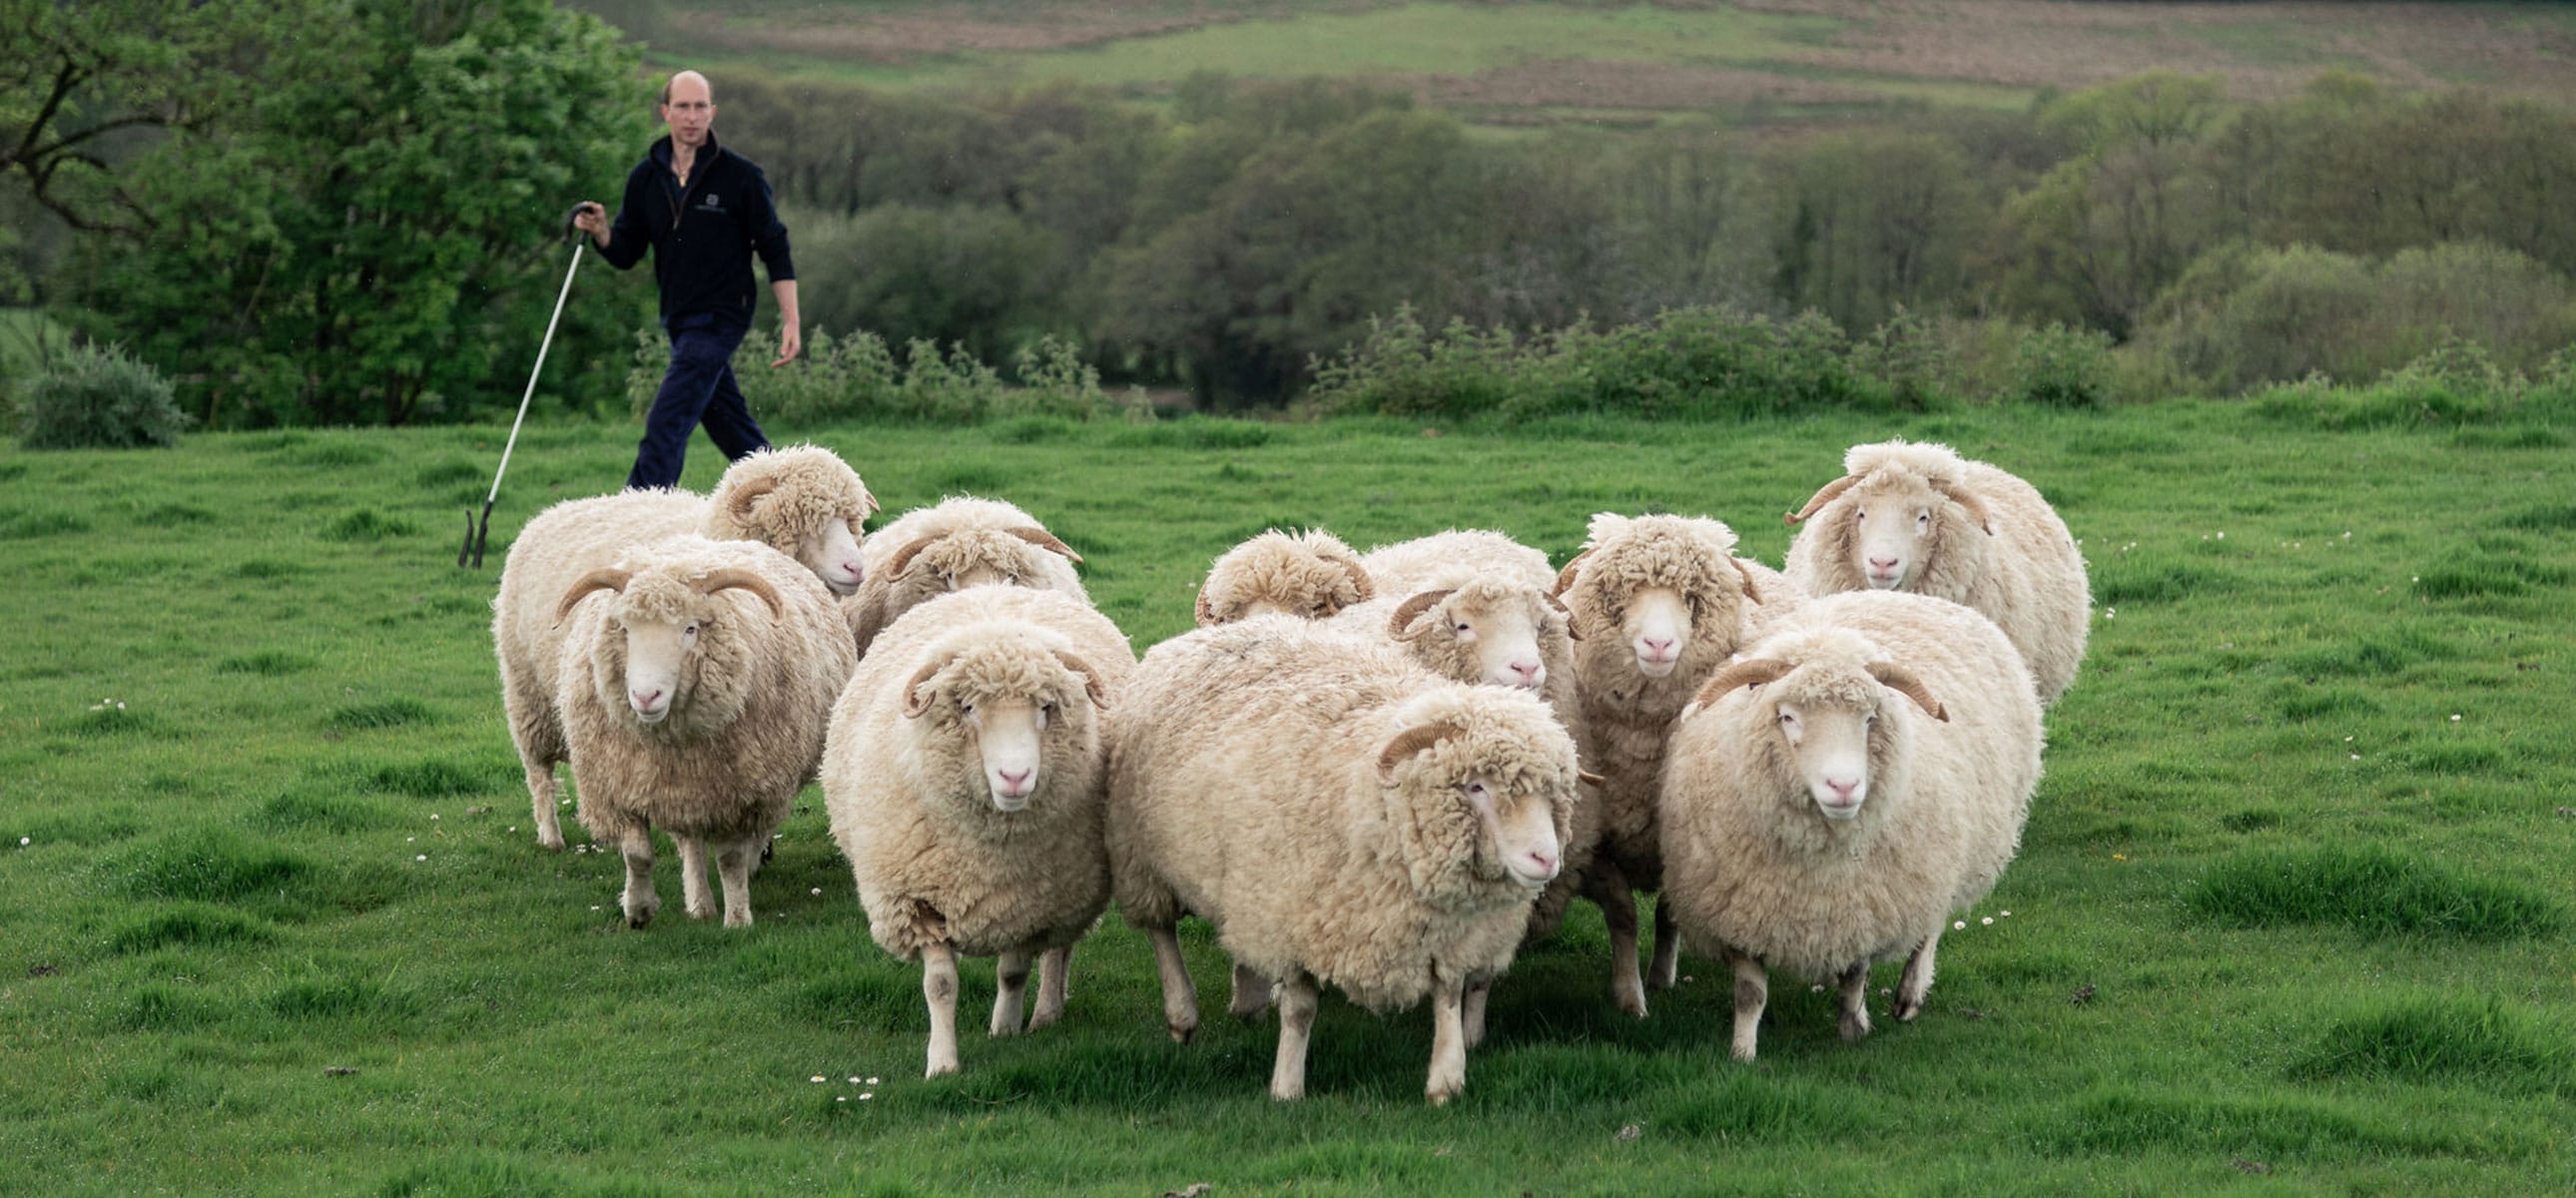 Sheep herding on The Chedington Estate